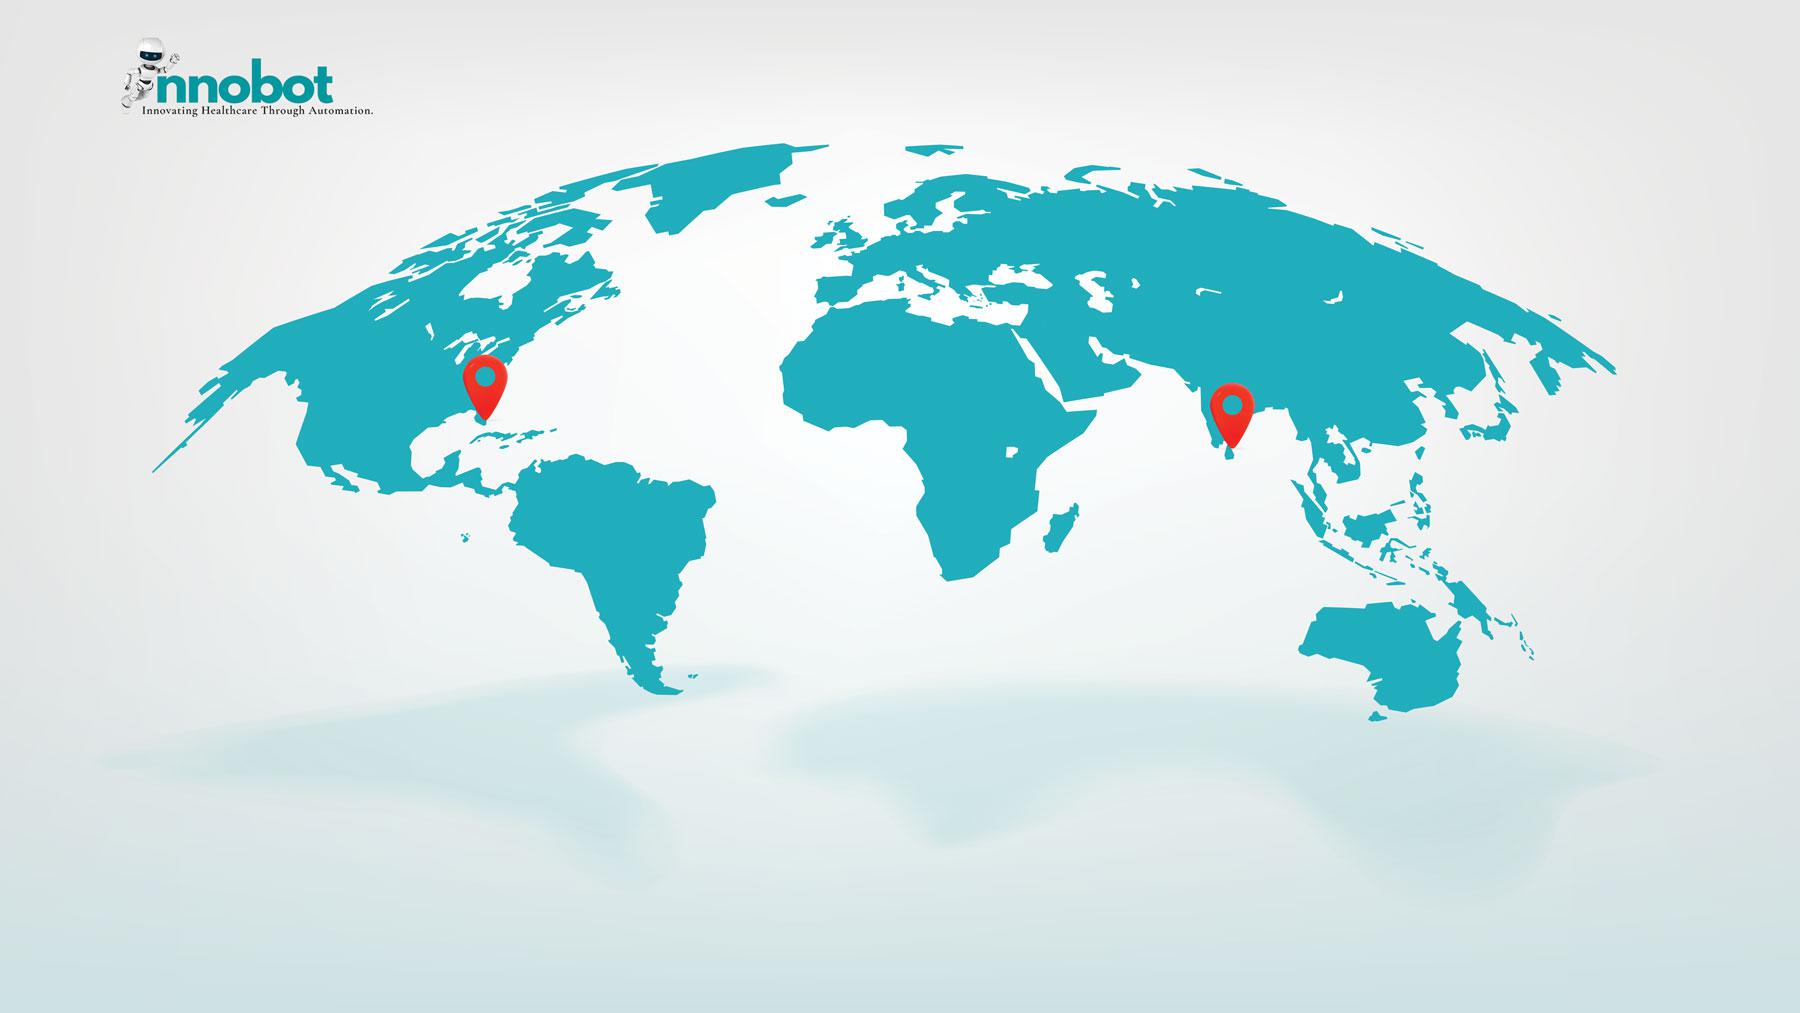 Innobot Health Worldwide locations